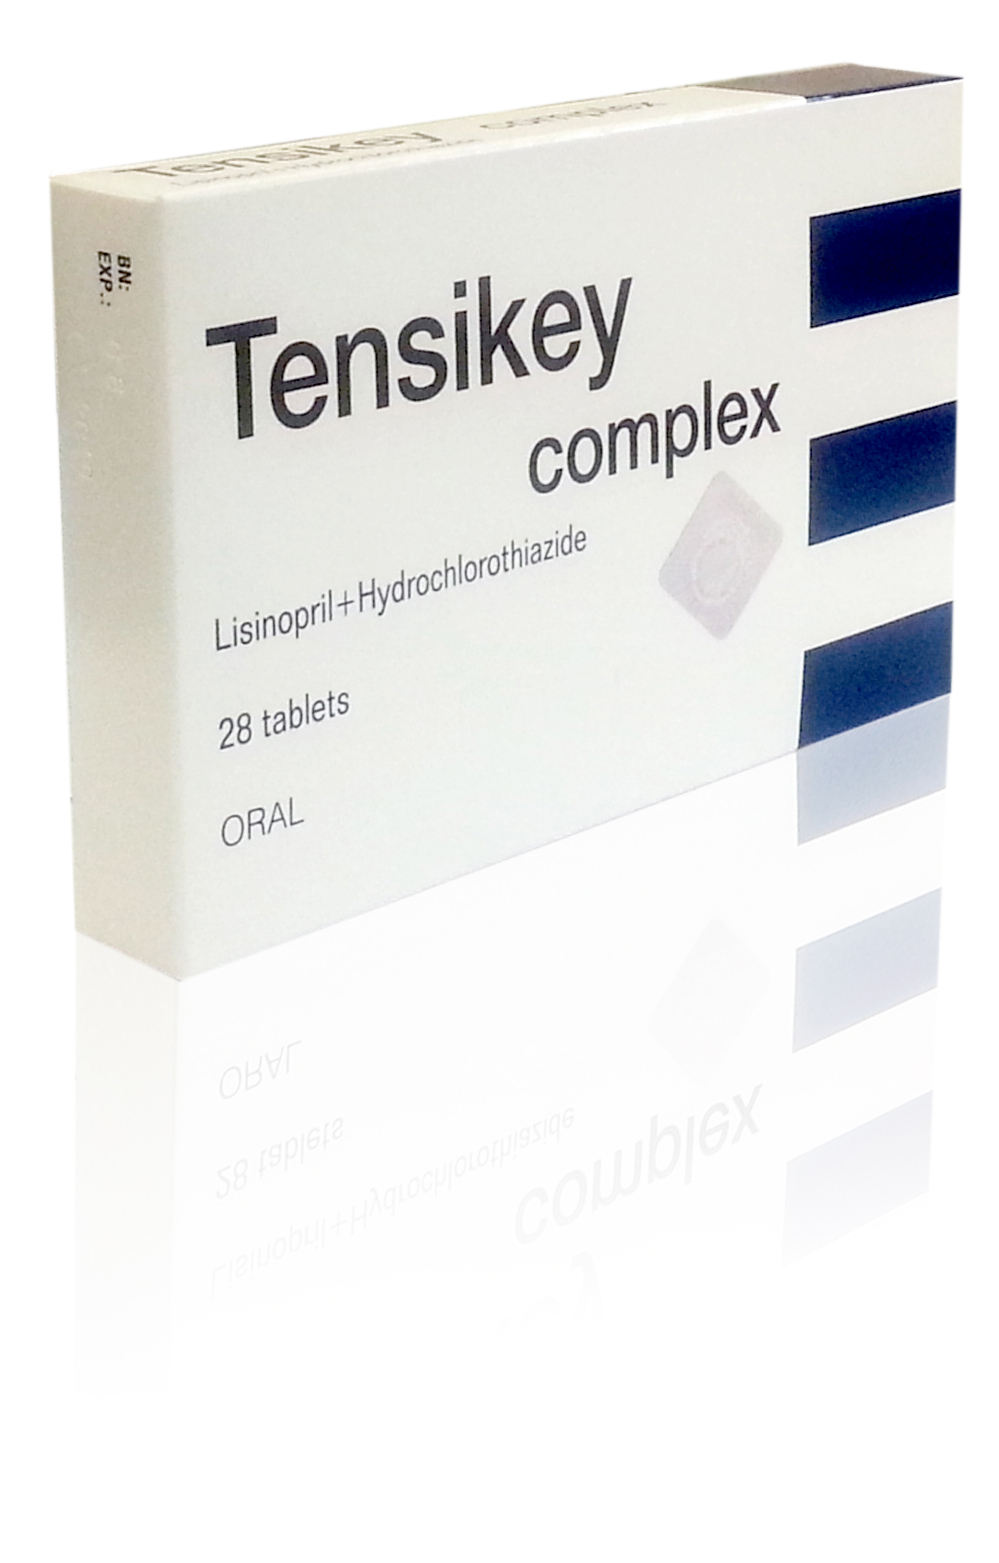 Tensikey - image 0